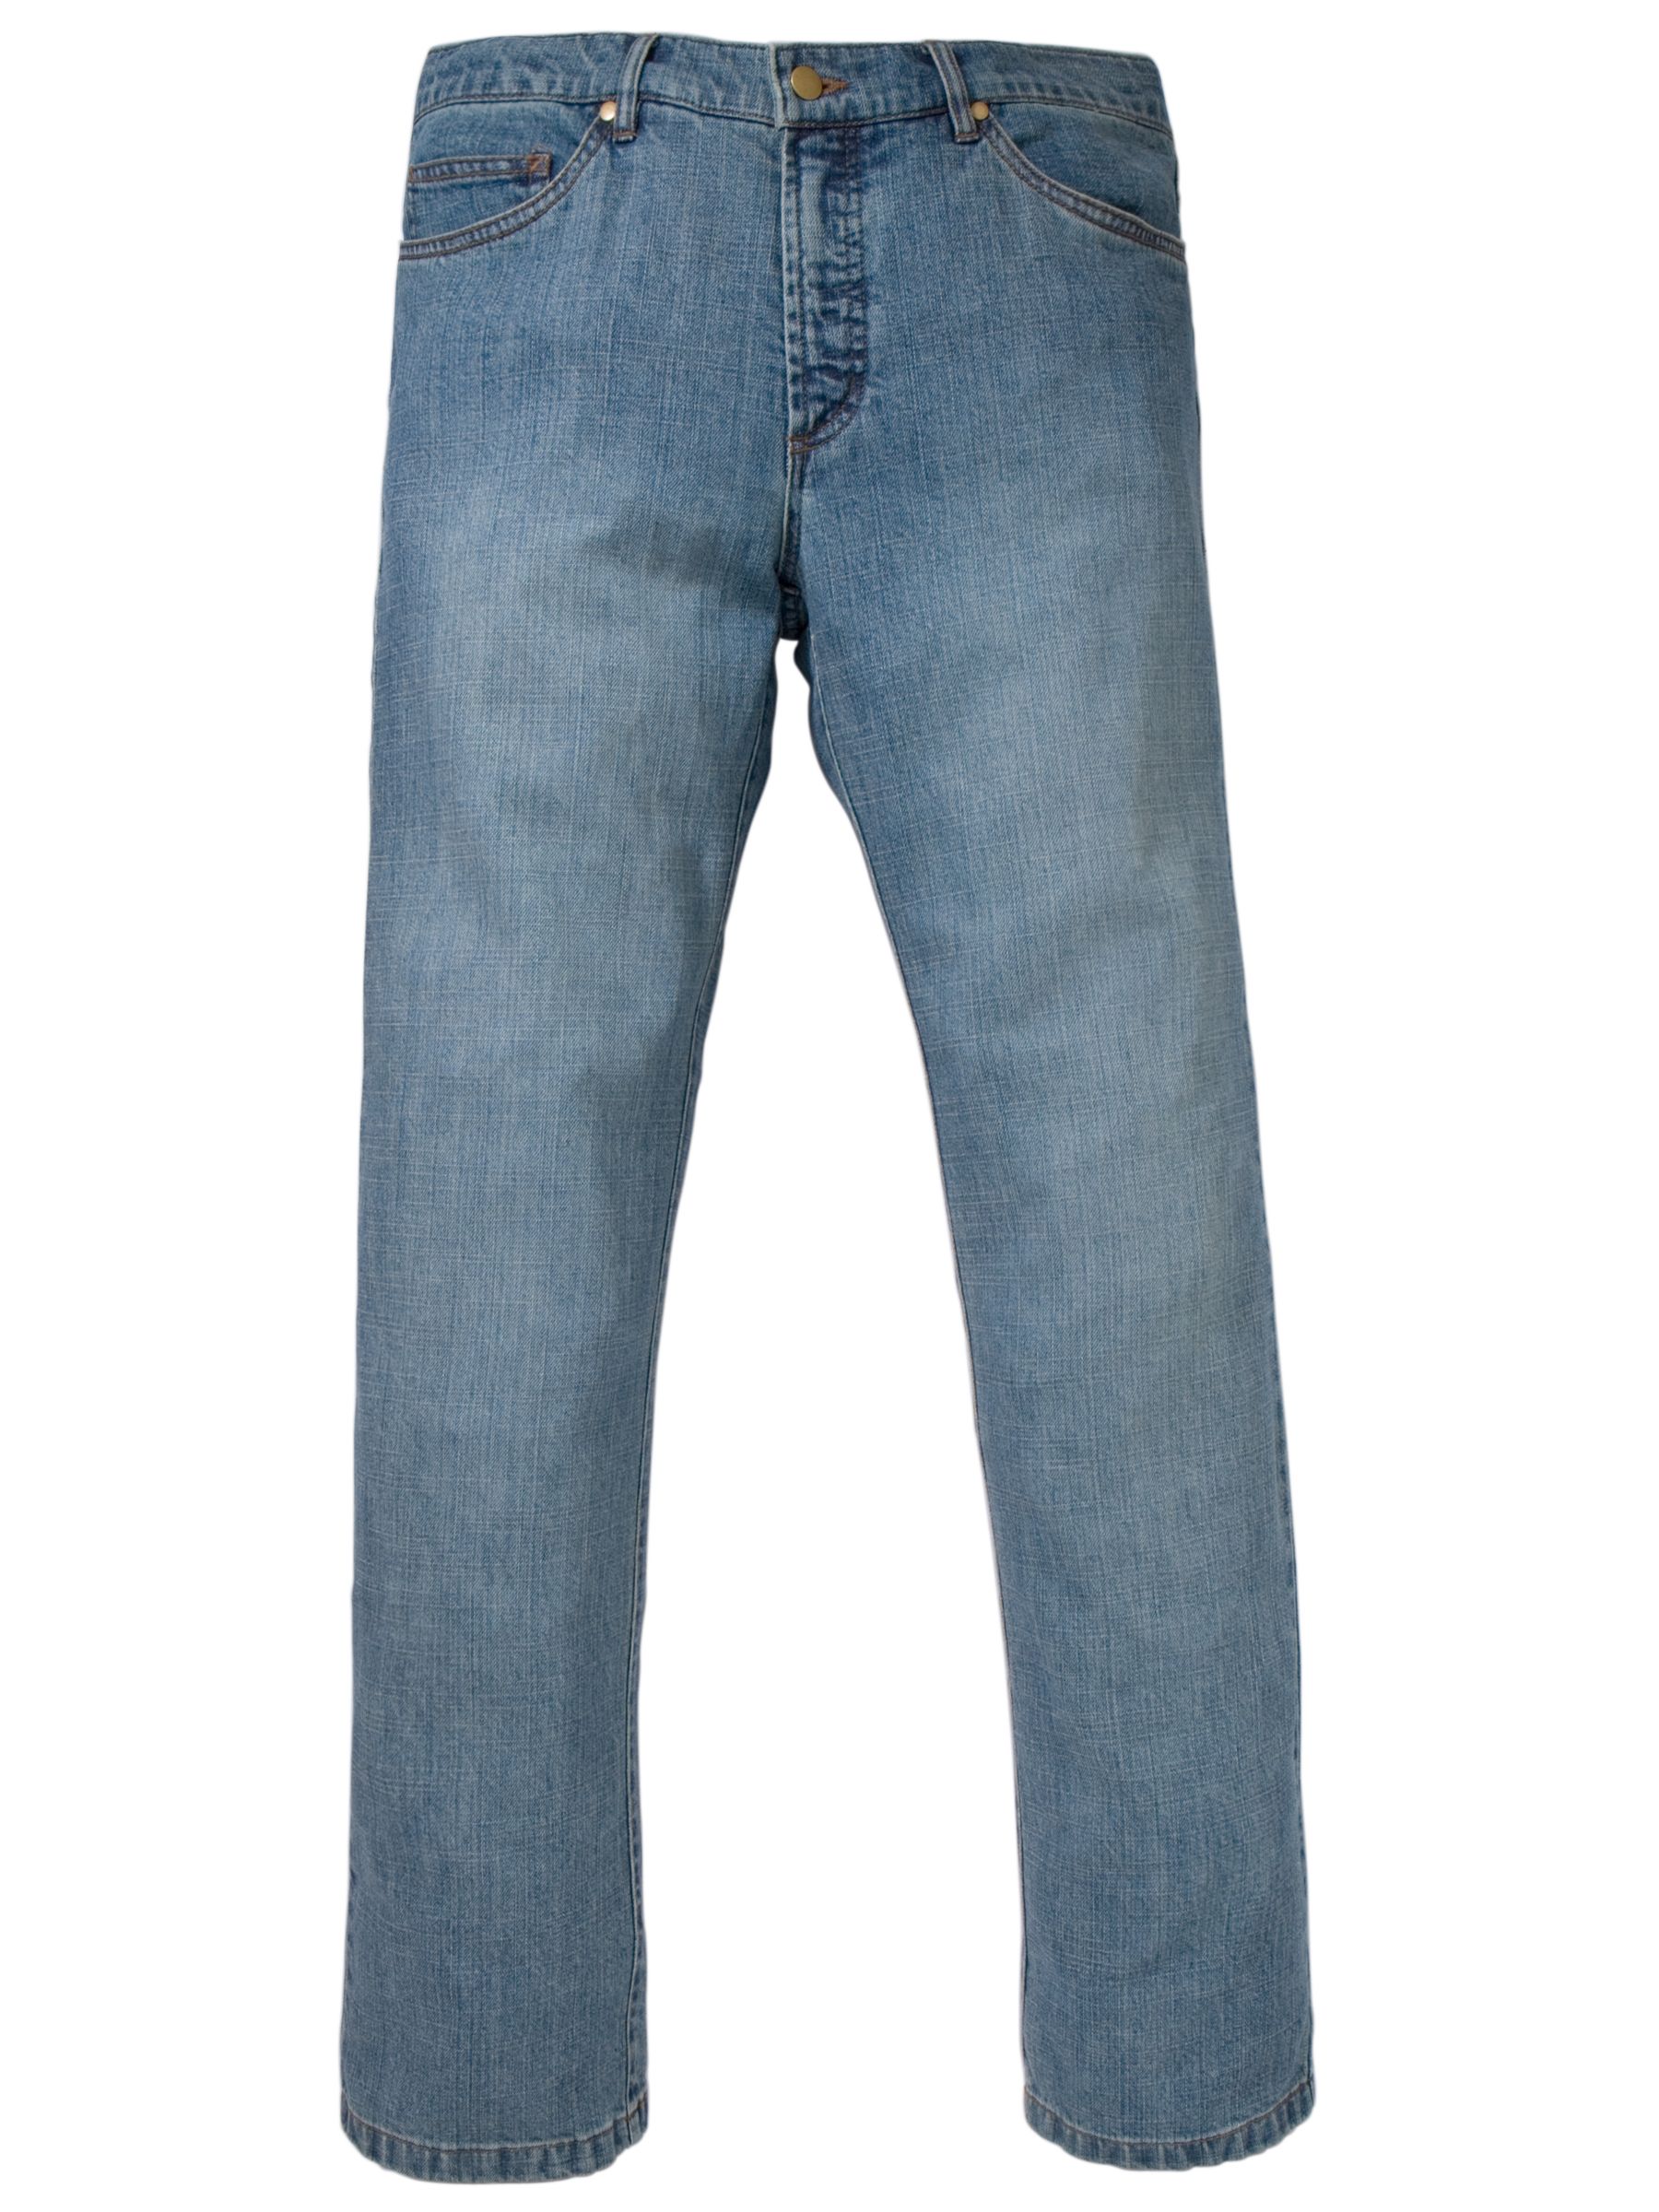 John Lewis Stretch Jeans, Mid Wash, Waist 36L